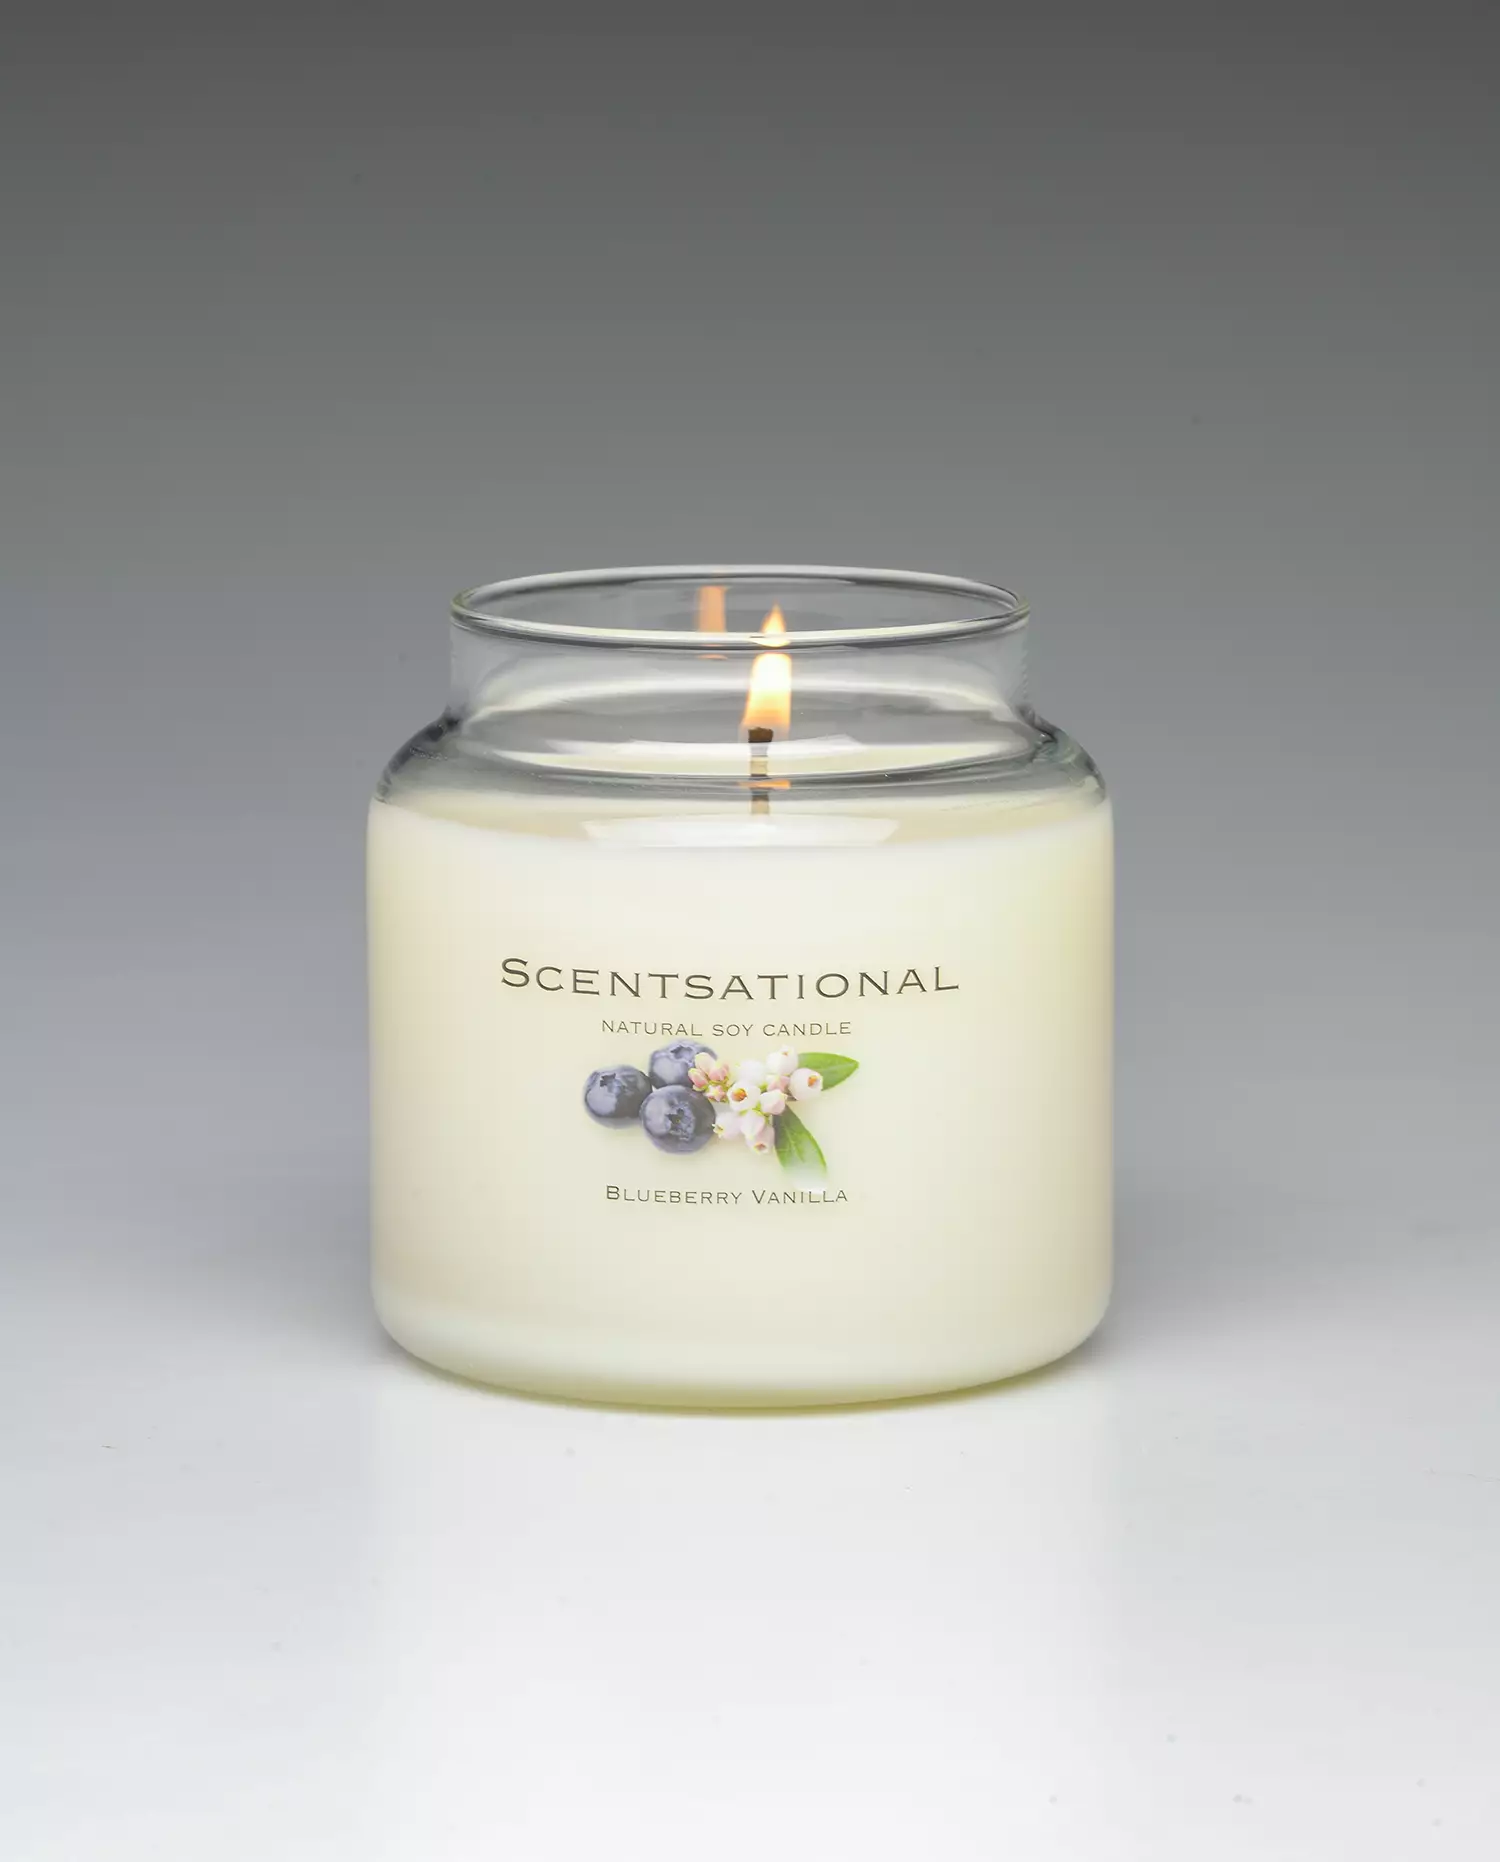 Blueberry Vanilla – 19oz scented candle burning